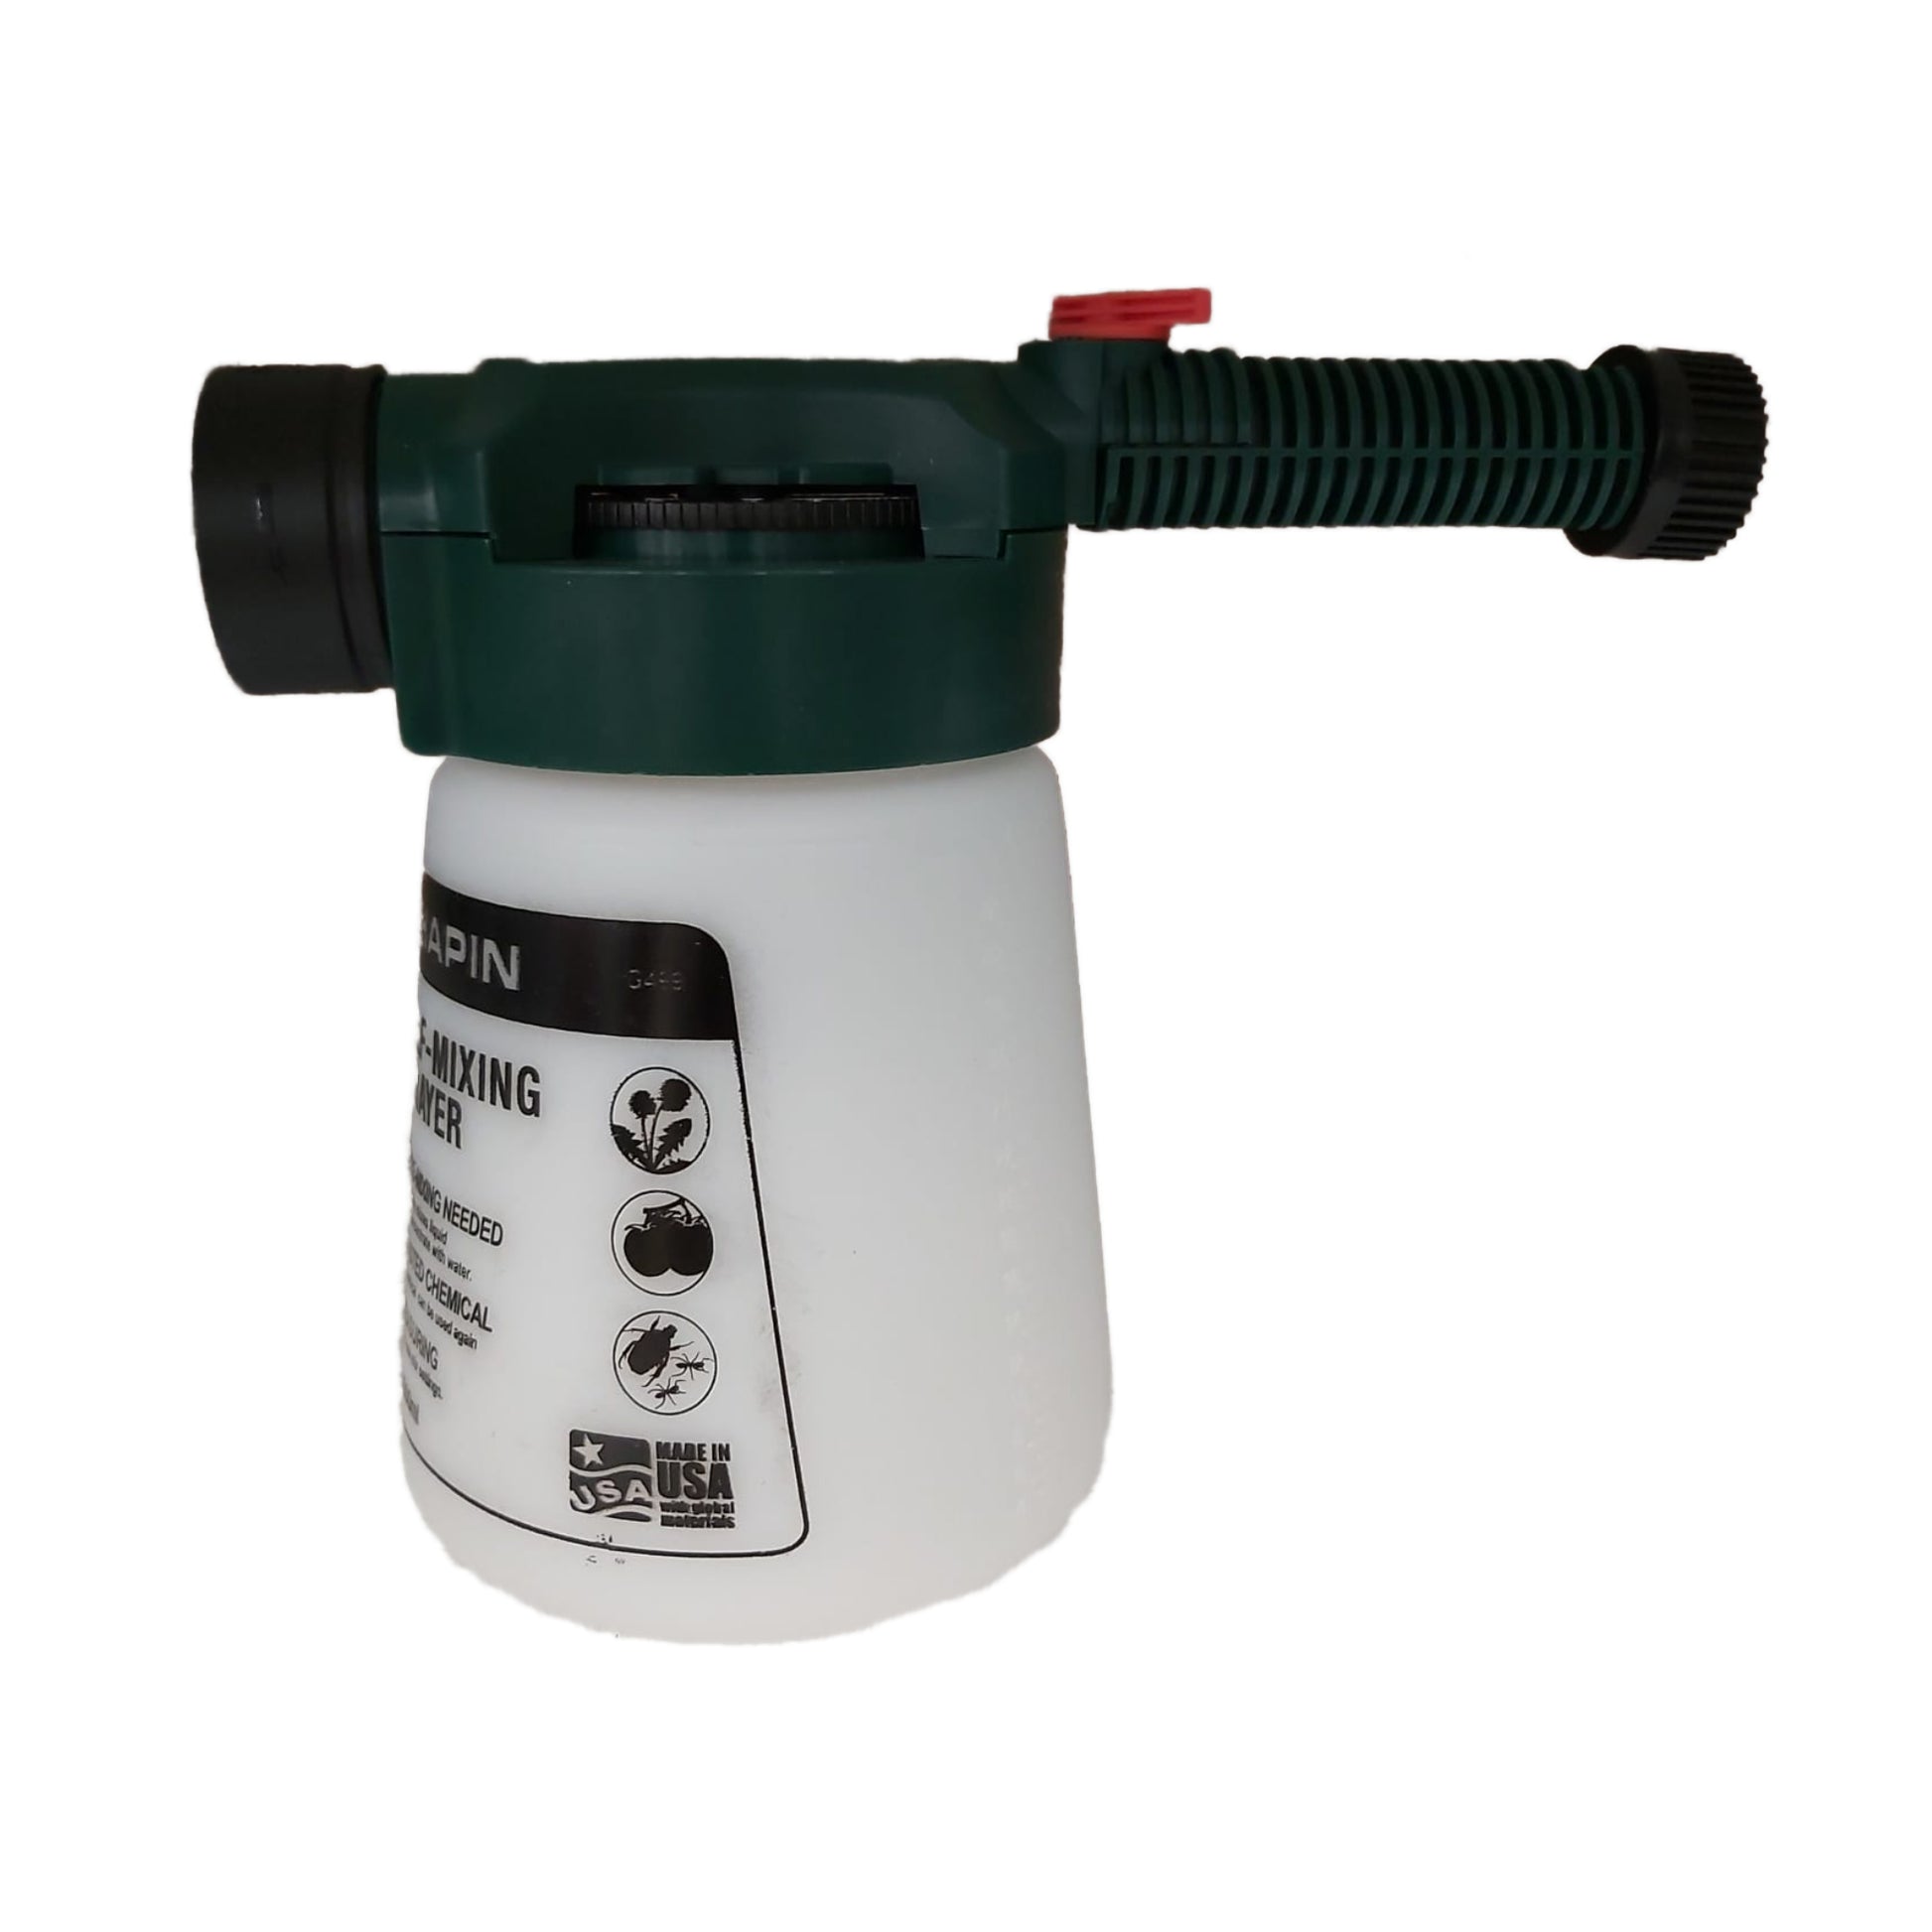 Chapin Adjustable Spray Tip Hose End Sprayer 20 gal.